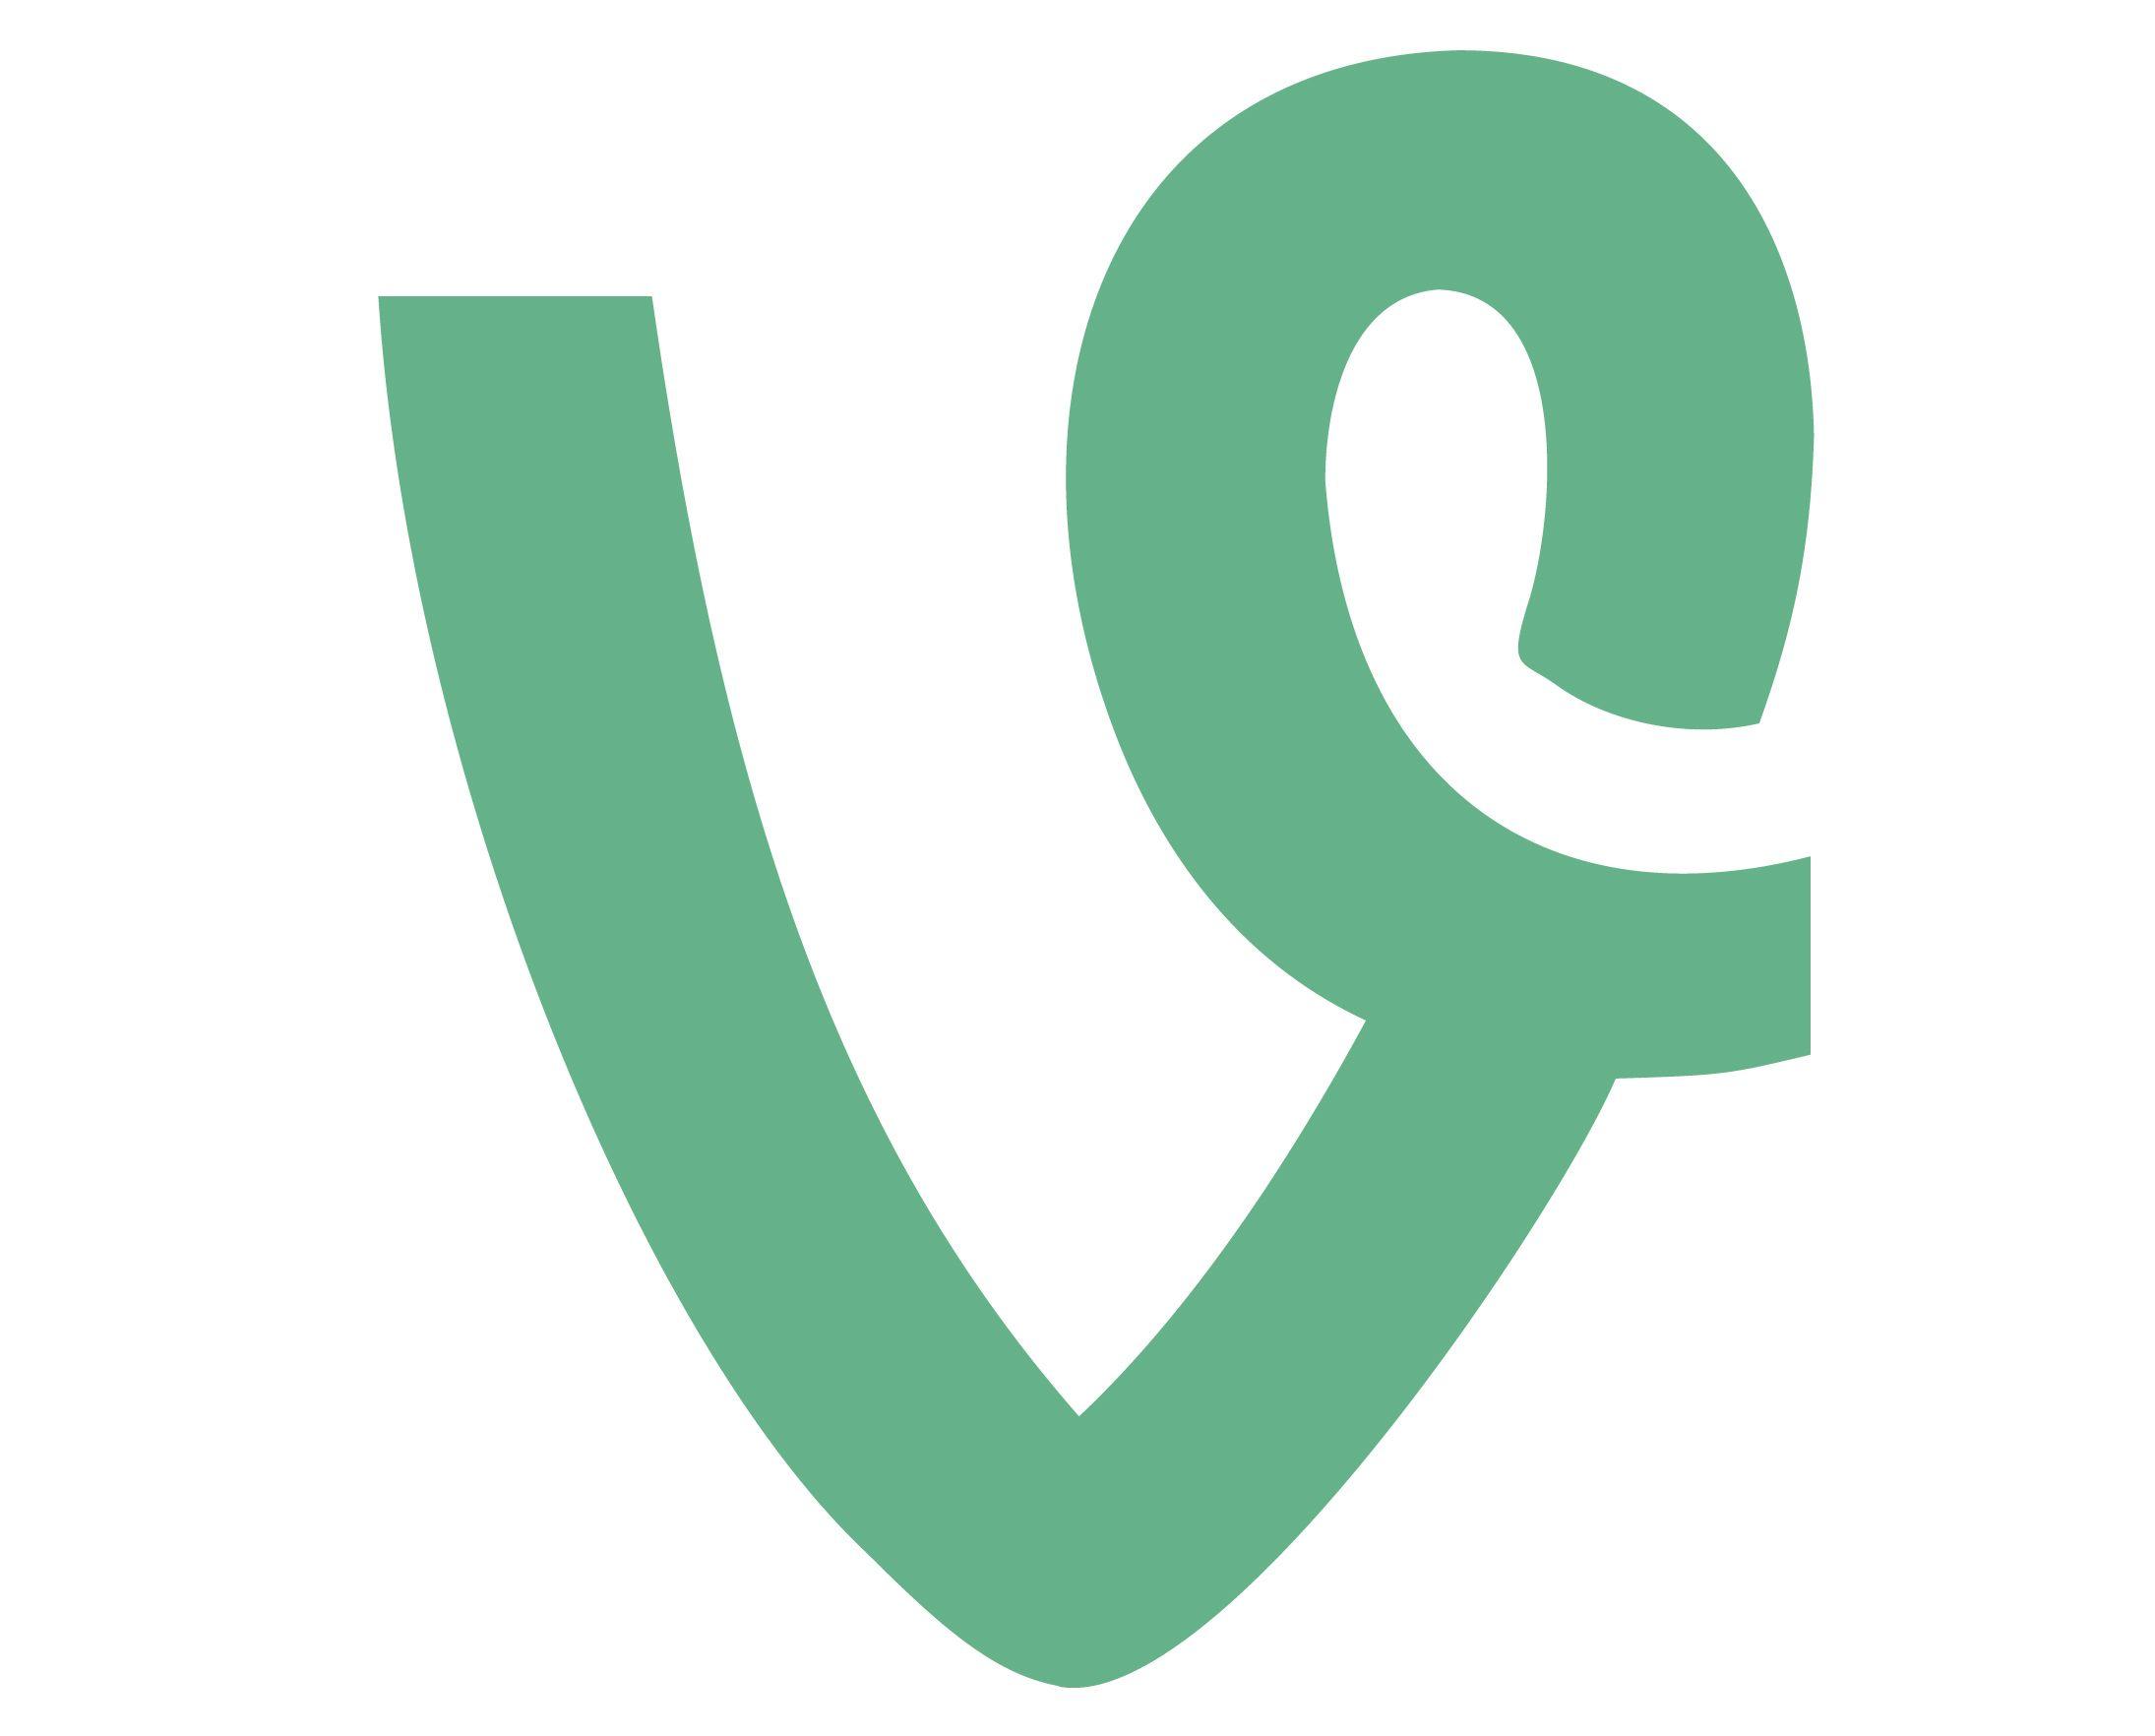 Vine Logo - Vine Logo, Vine Symbol, Meaning, History and Evolution